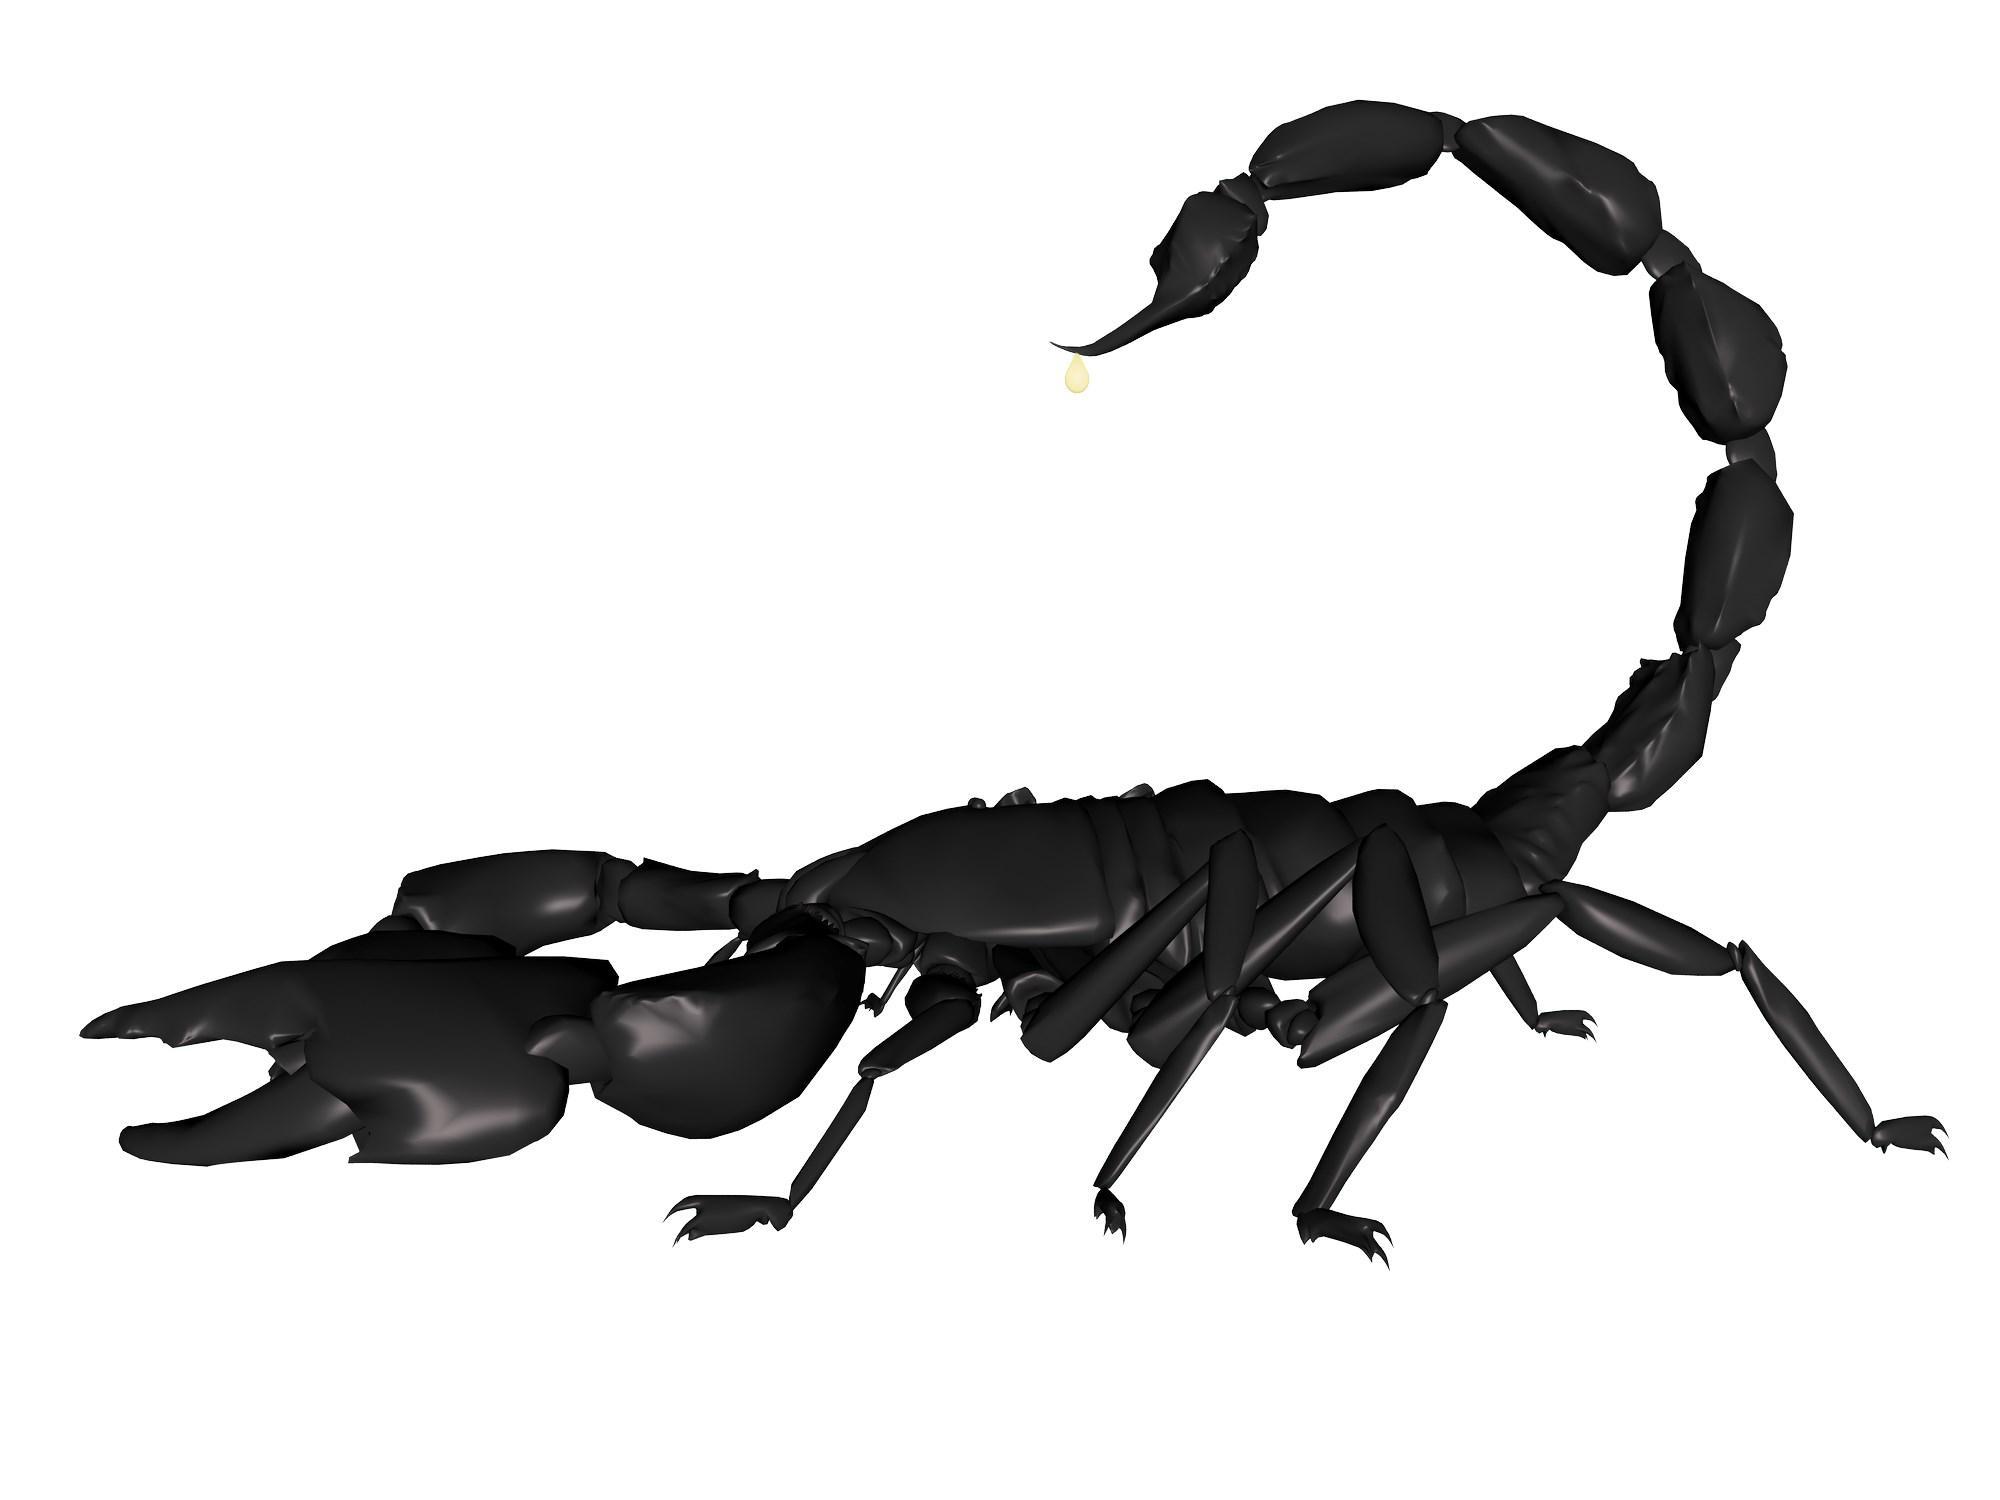 Scorpion Arachnids High Resolution Desktop Wallpaper, Scorpion Arachnids, Animal